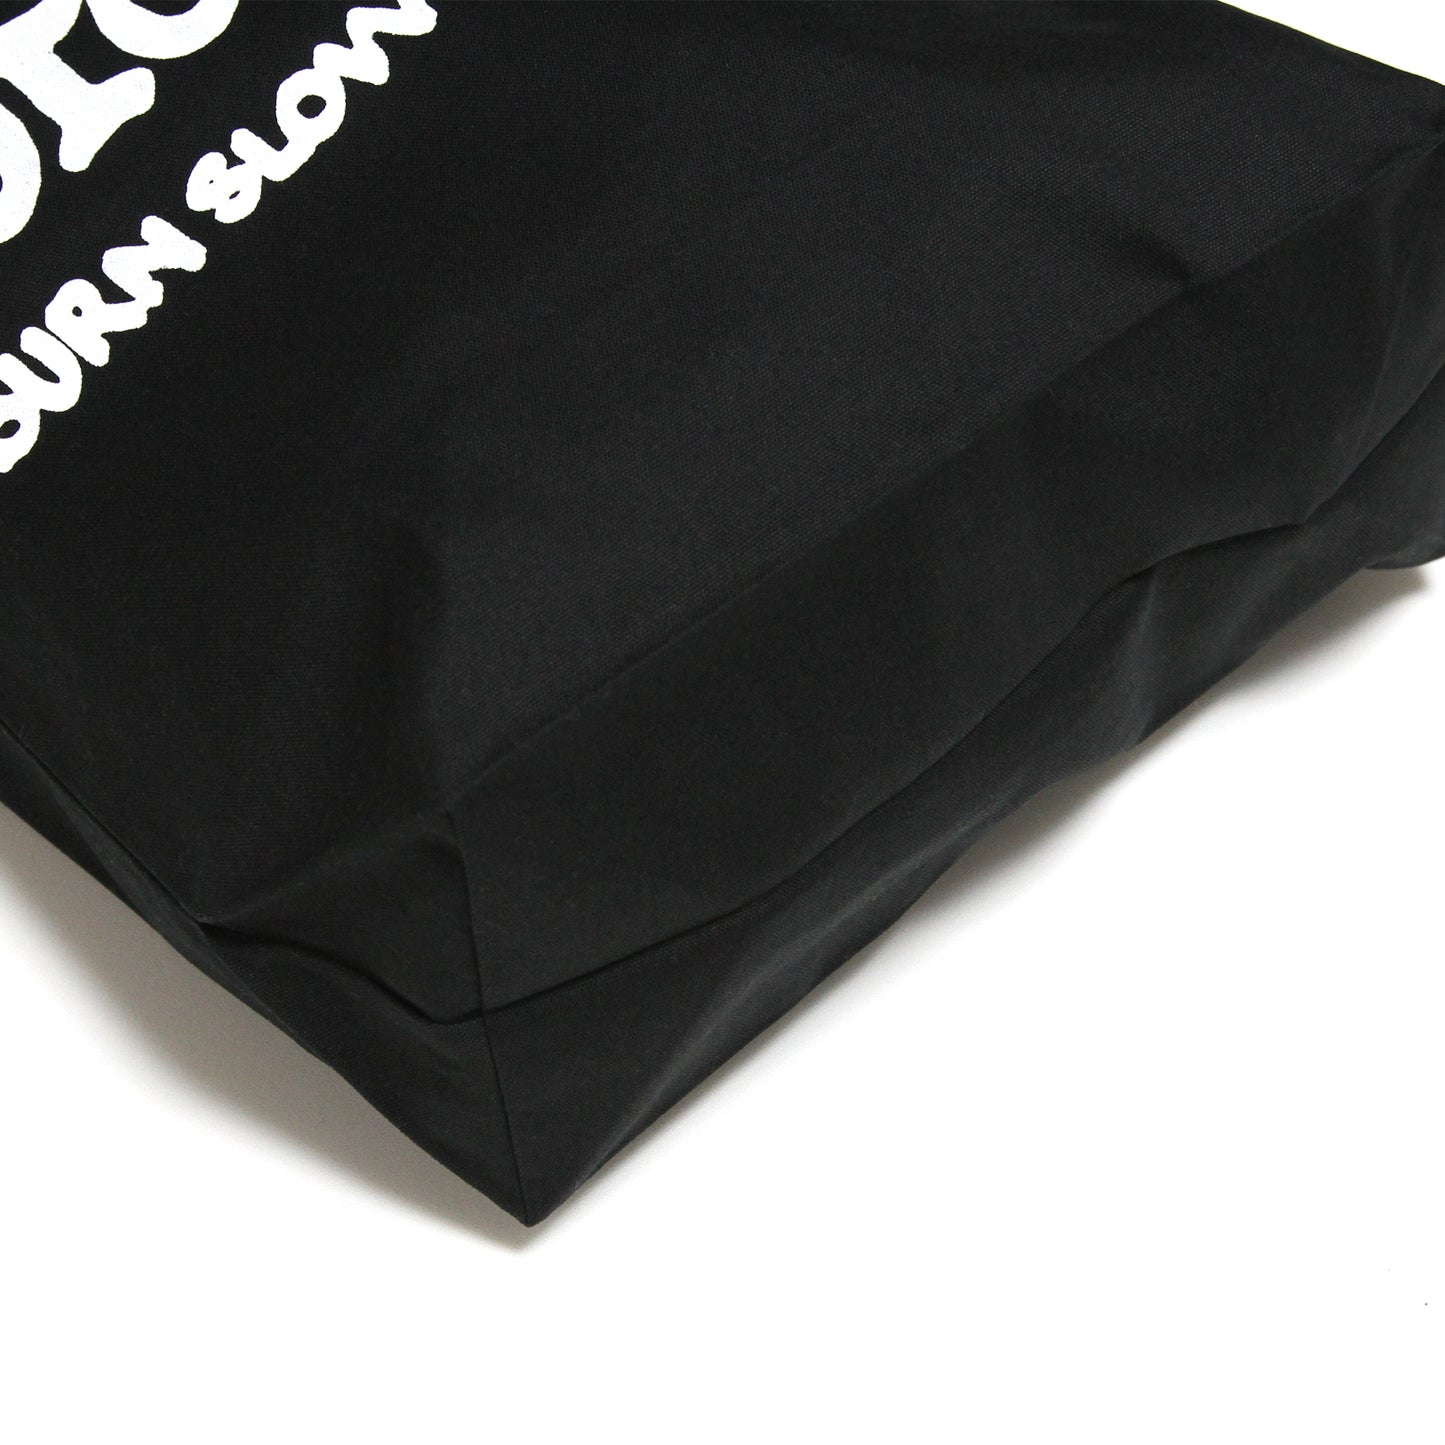 MOTO-BUNKA X BURN SLOW - Collab Text Logo Tote Bag/Black